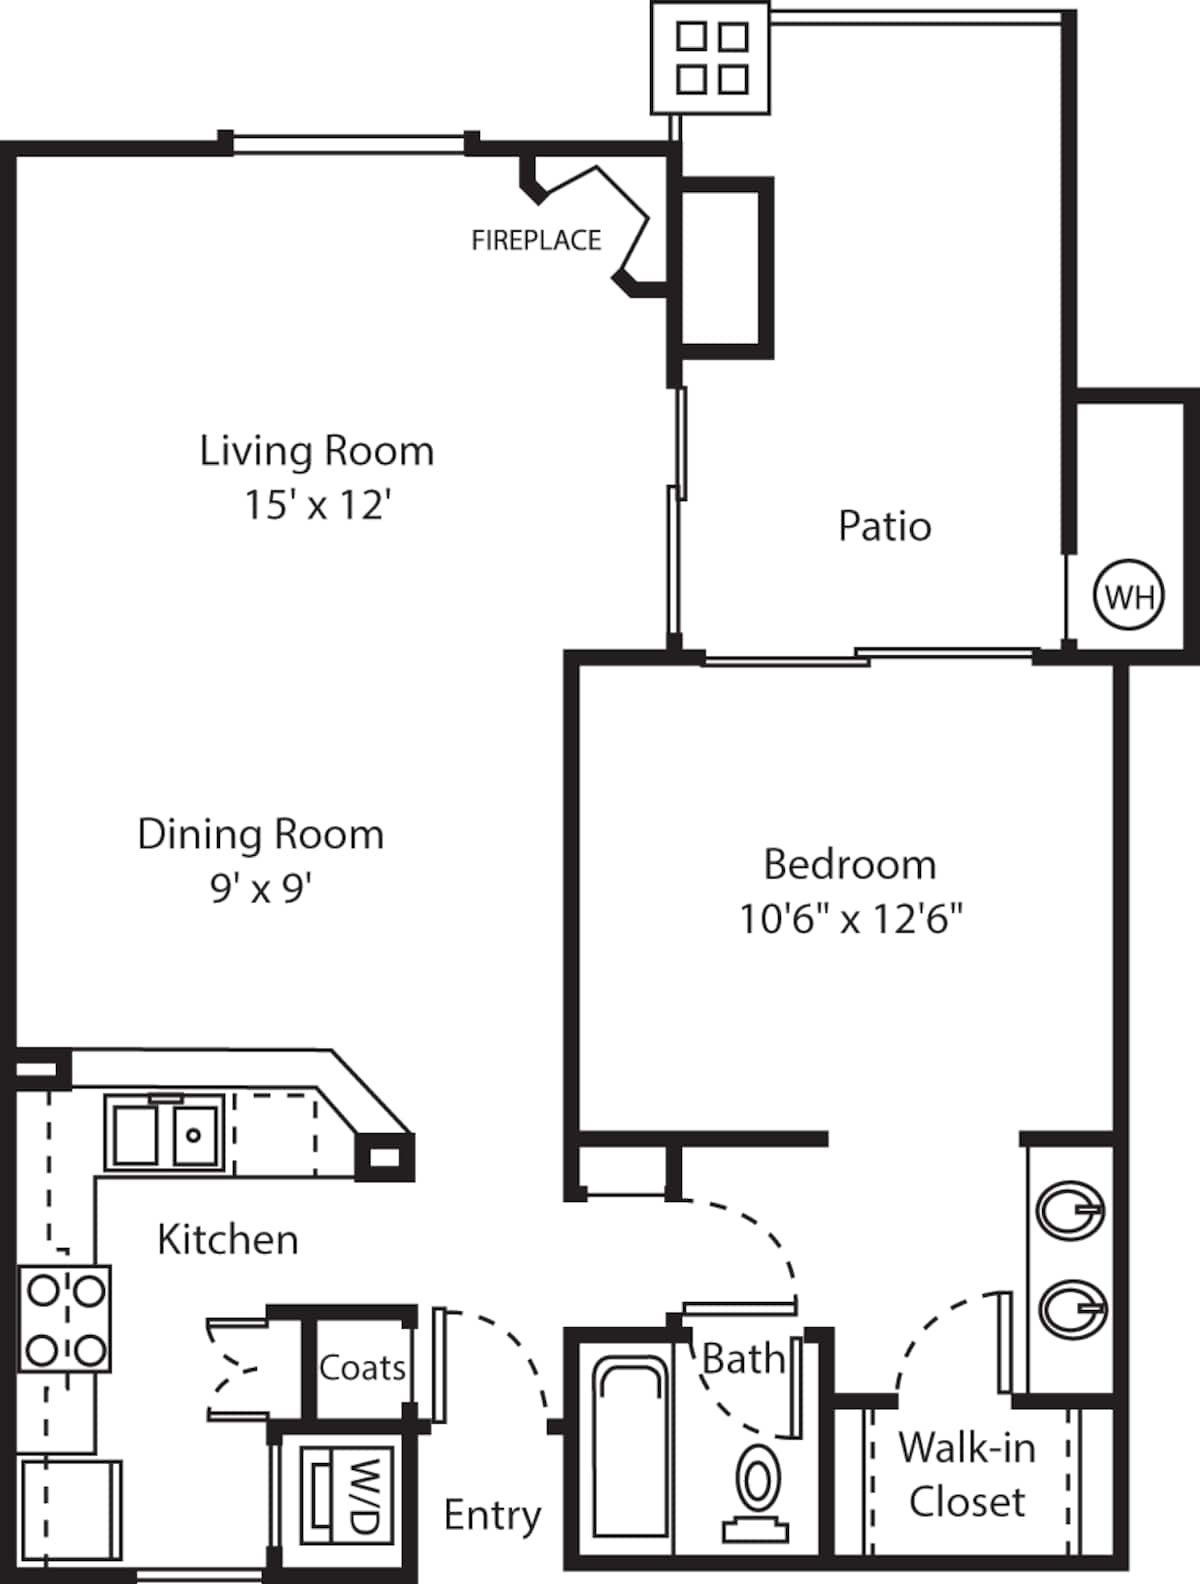 Floorplan diagram for Padova, showing 1 bedroom